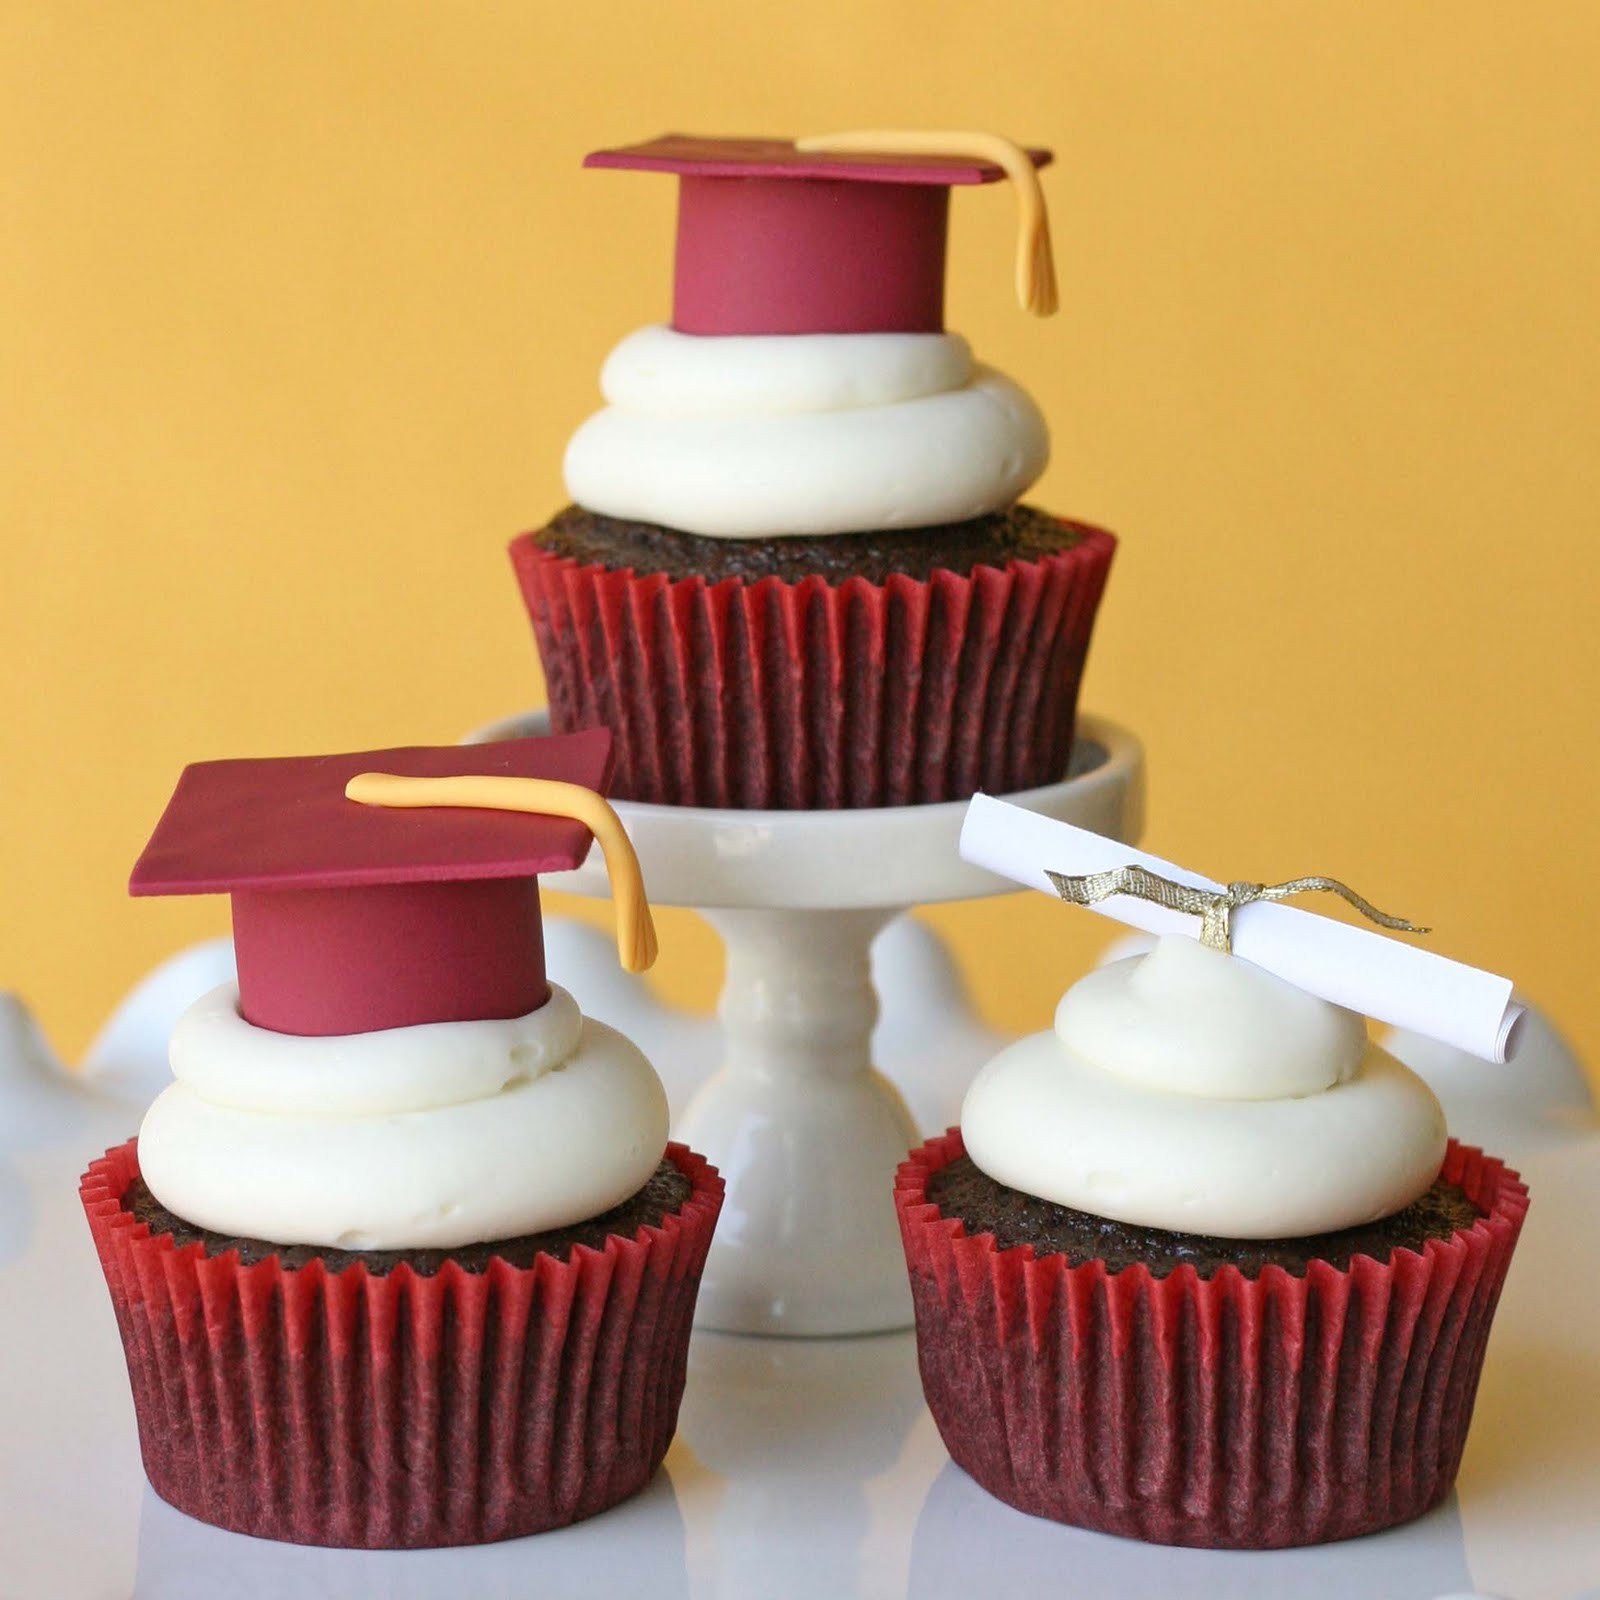 Cupcake Decorating Ideas Graduation Party
 Graduation Cupcakes and How To Make Fondant Graduation